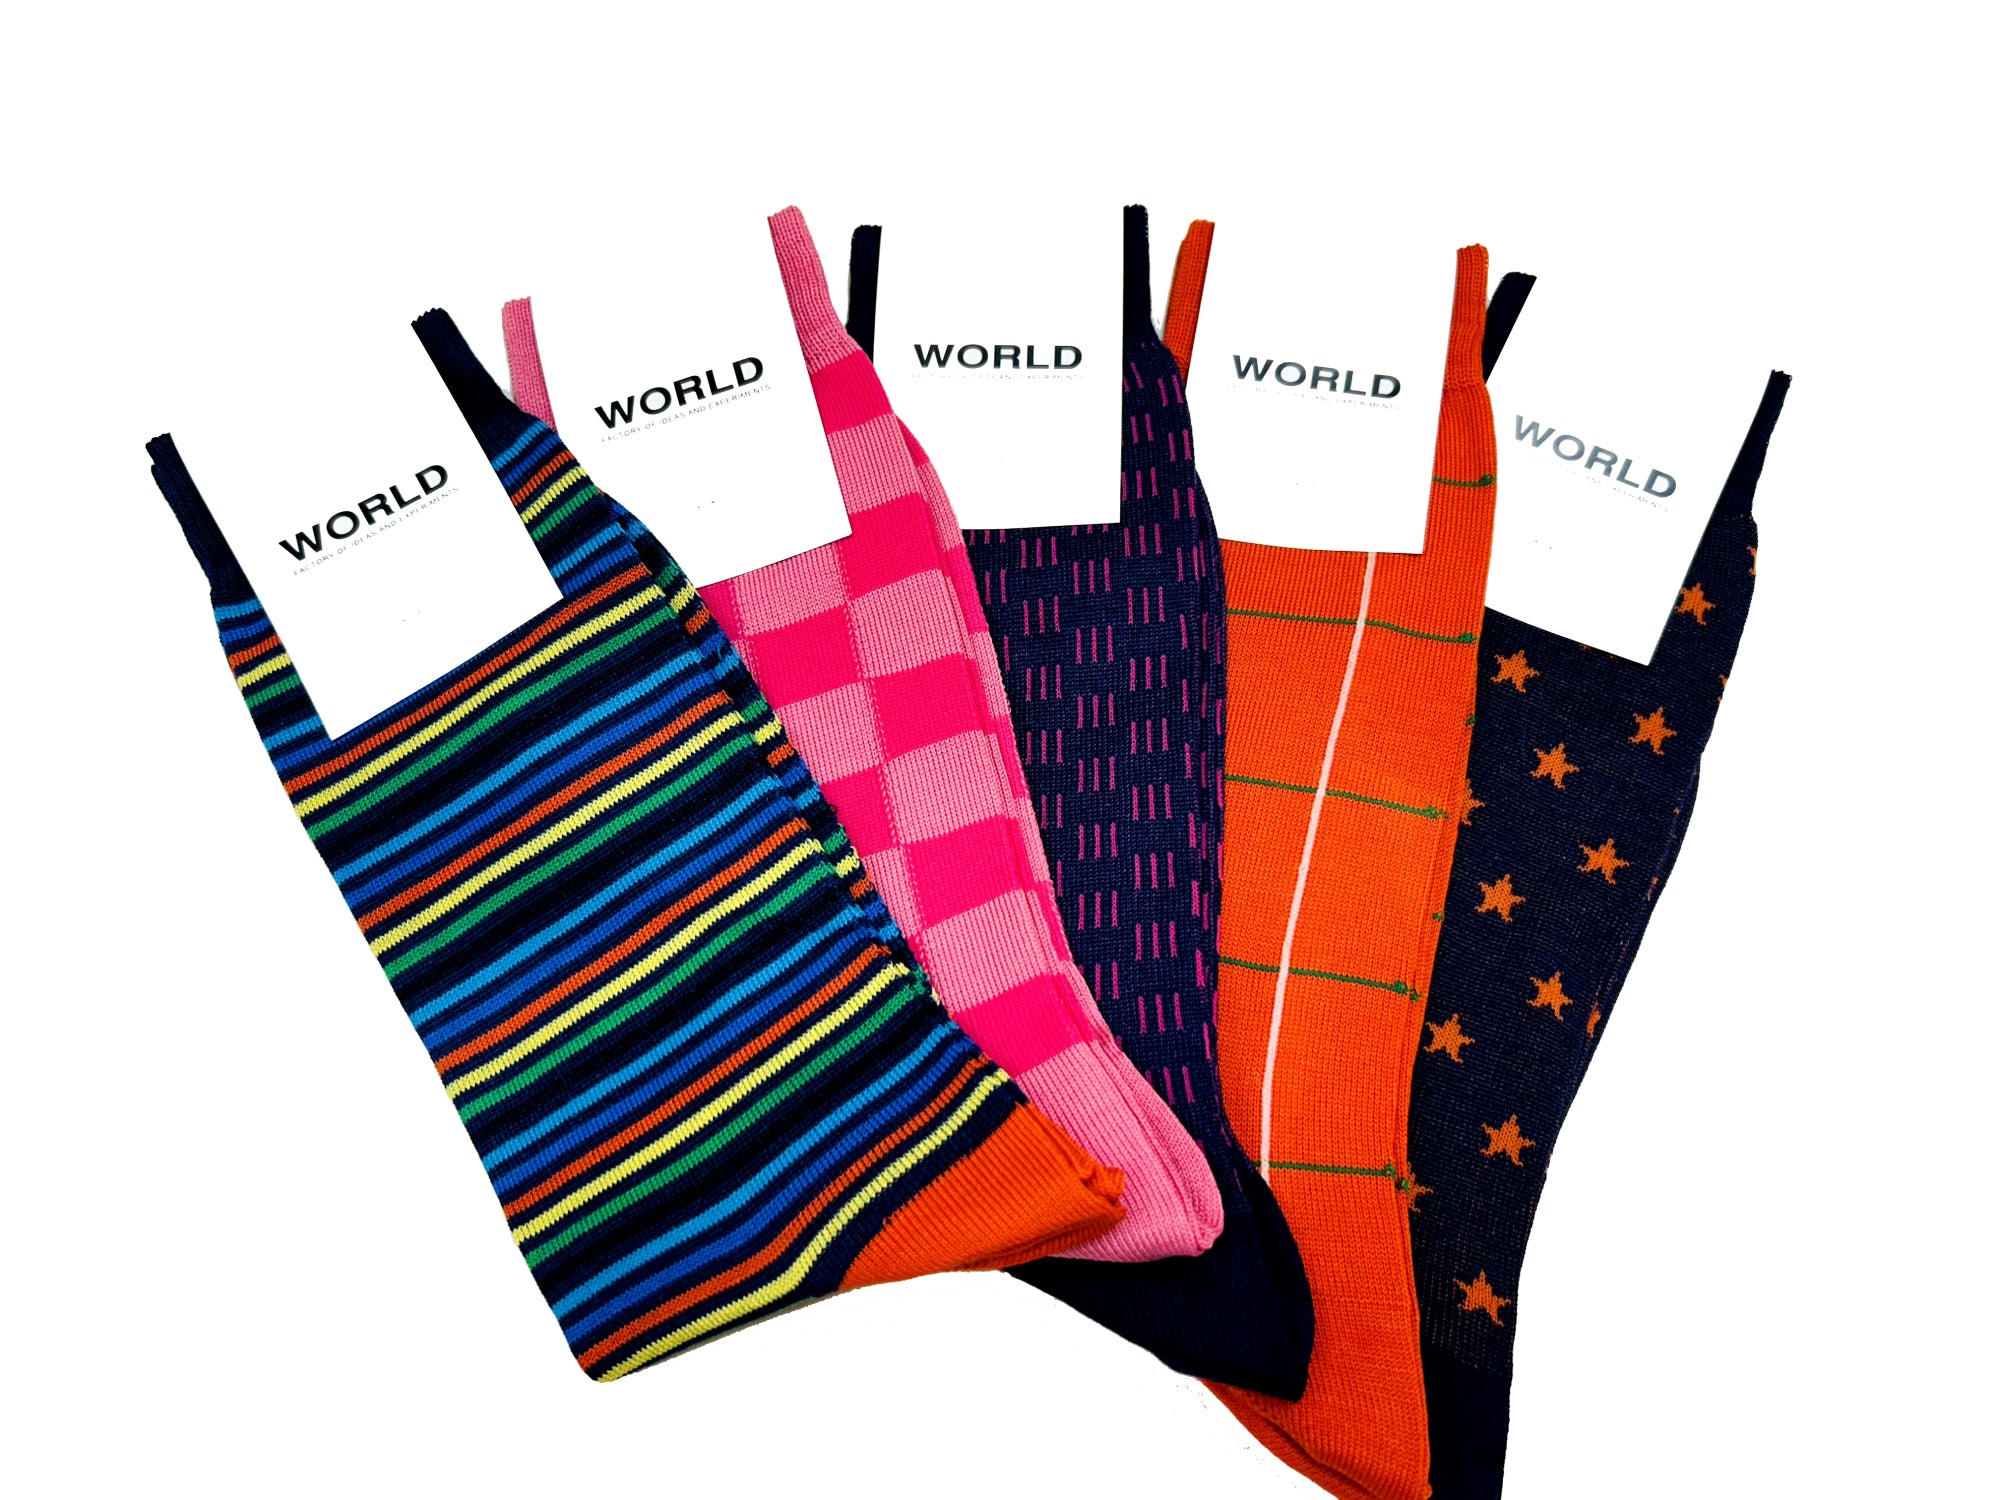 WORLD Italian Made Cotton Socks - Navy w/ Orange Stars